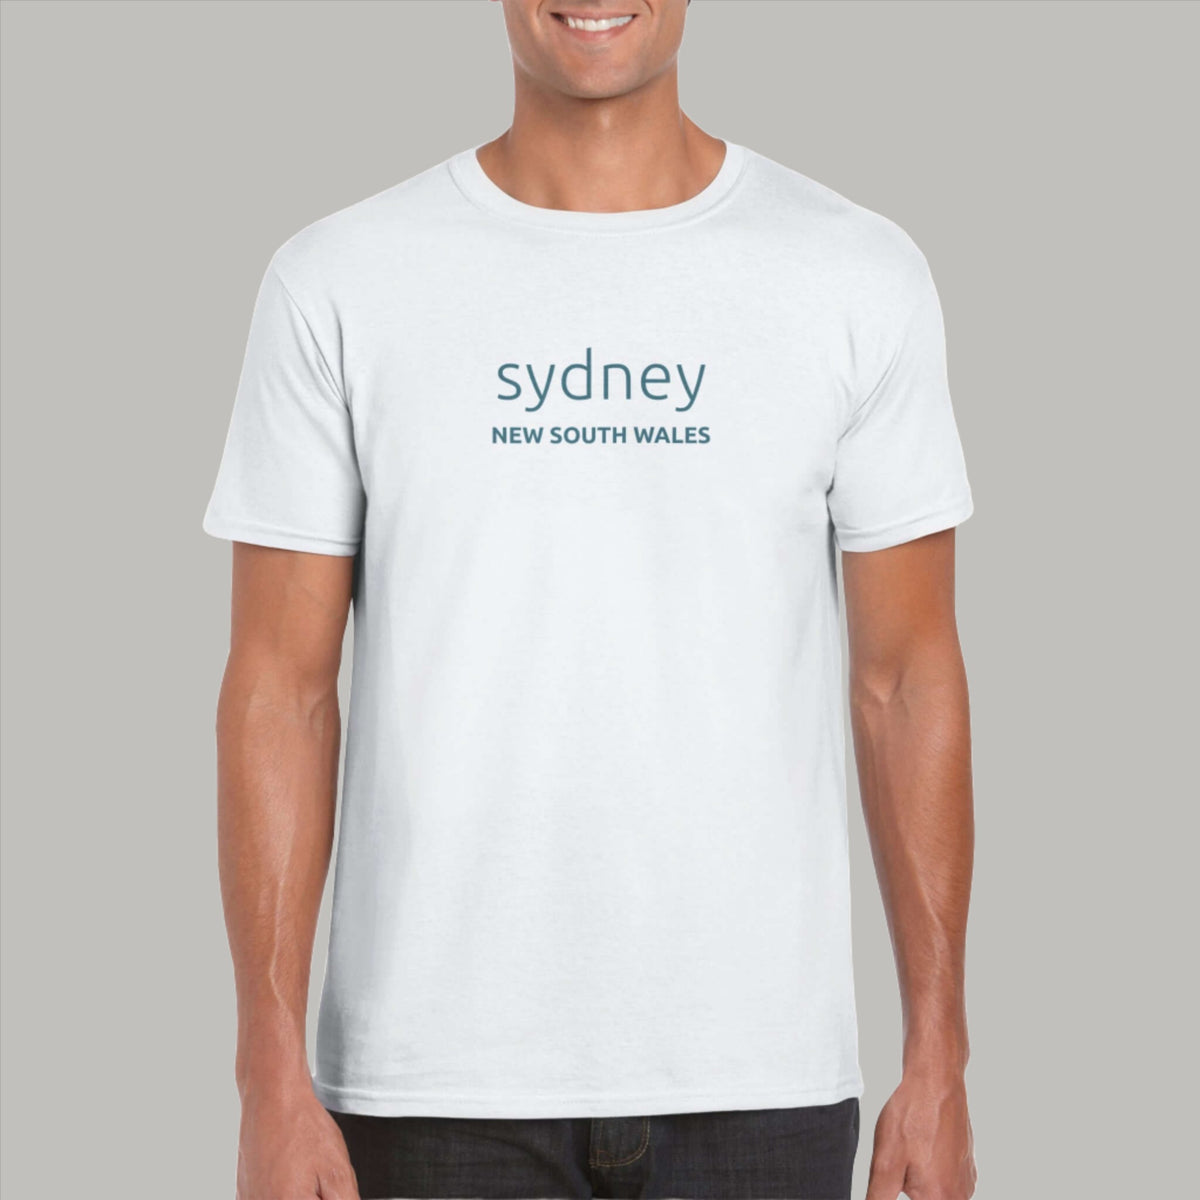 Mens Sydney New South Wales white t shirt - MangoBap